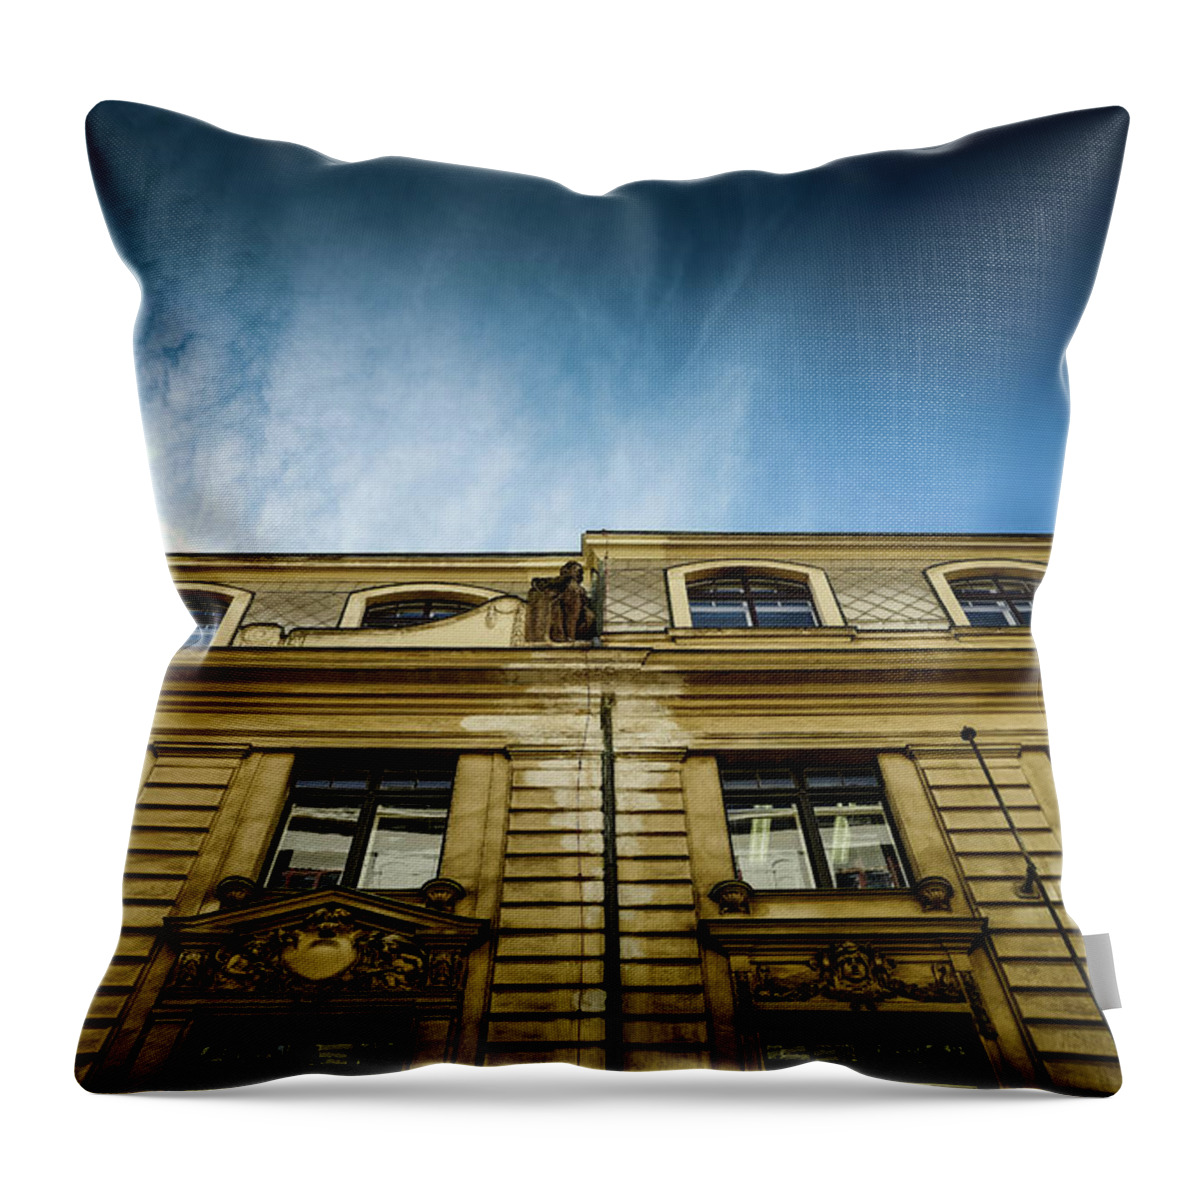 Prague Throw Pillow featuring the photograph Golden Facade by M G Whittingham